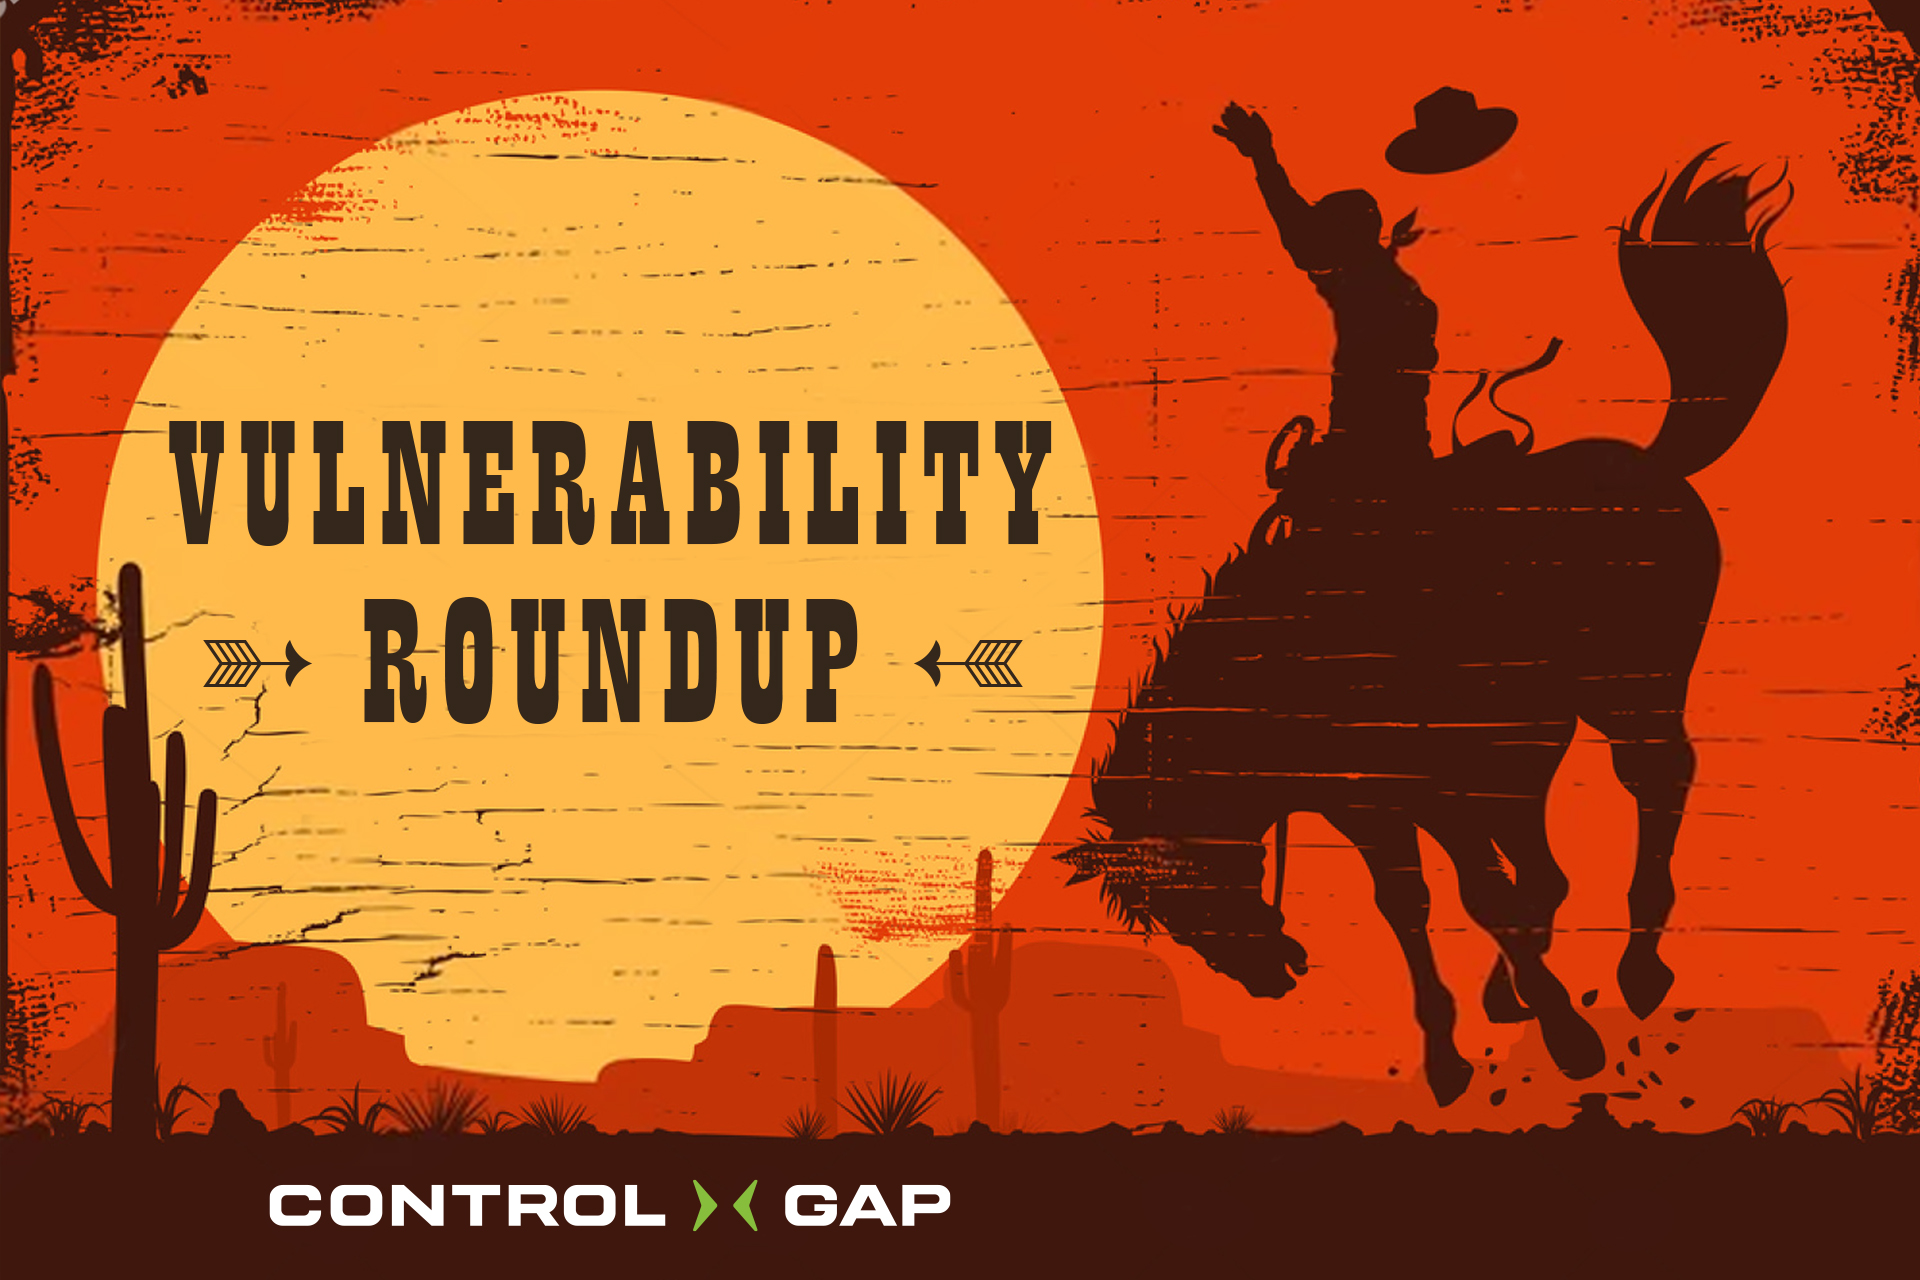 Control Gap Vulnerability Roundup: November 12th to November 18th